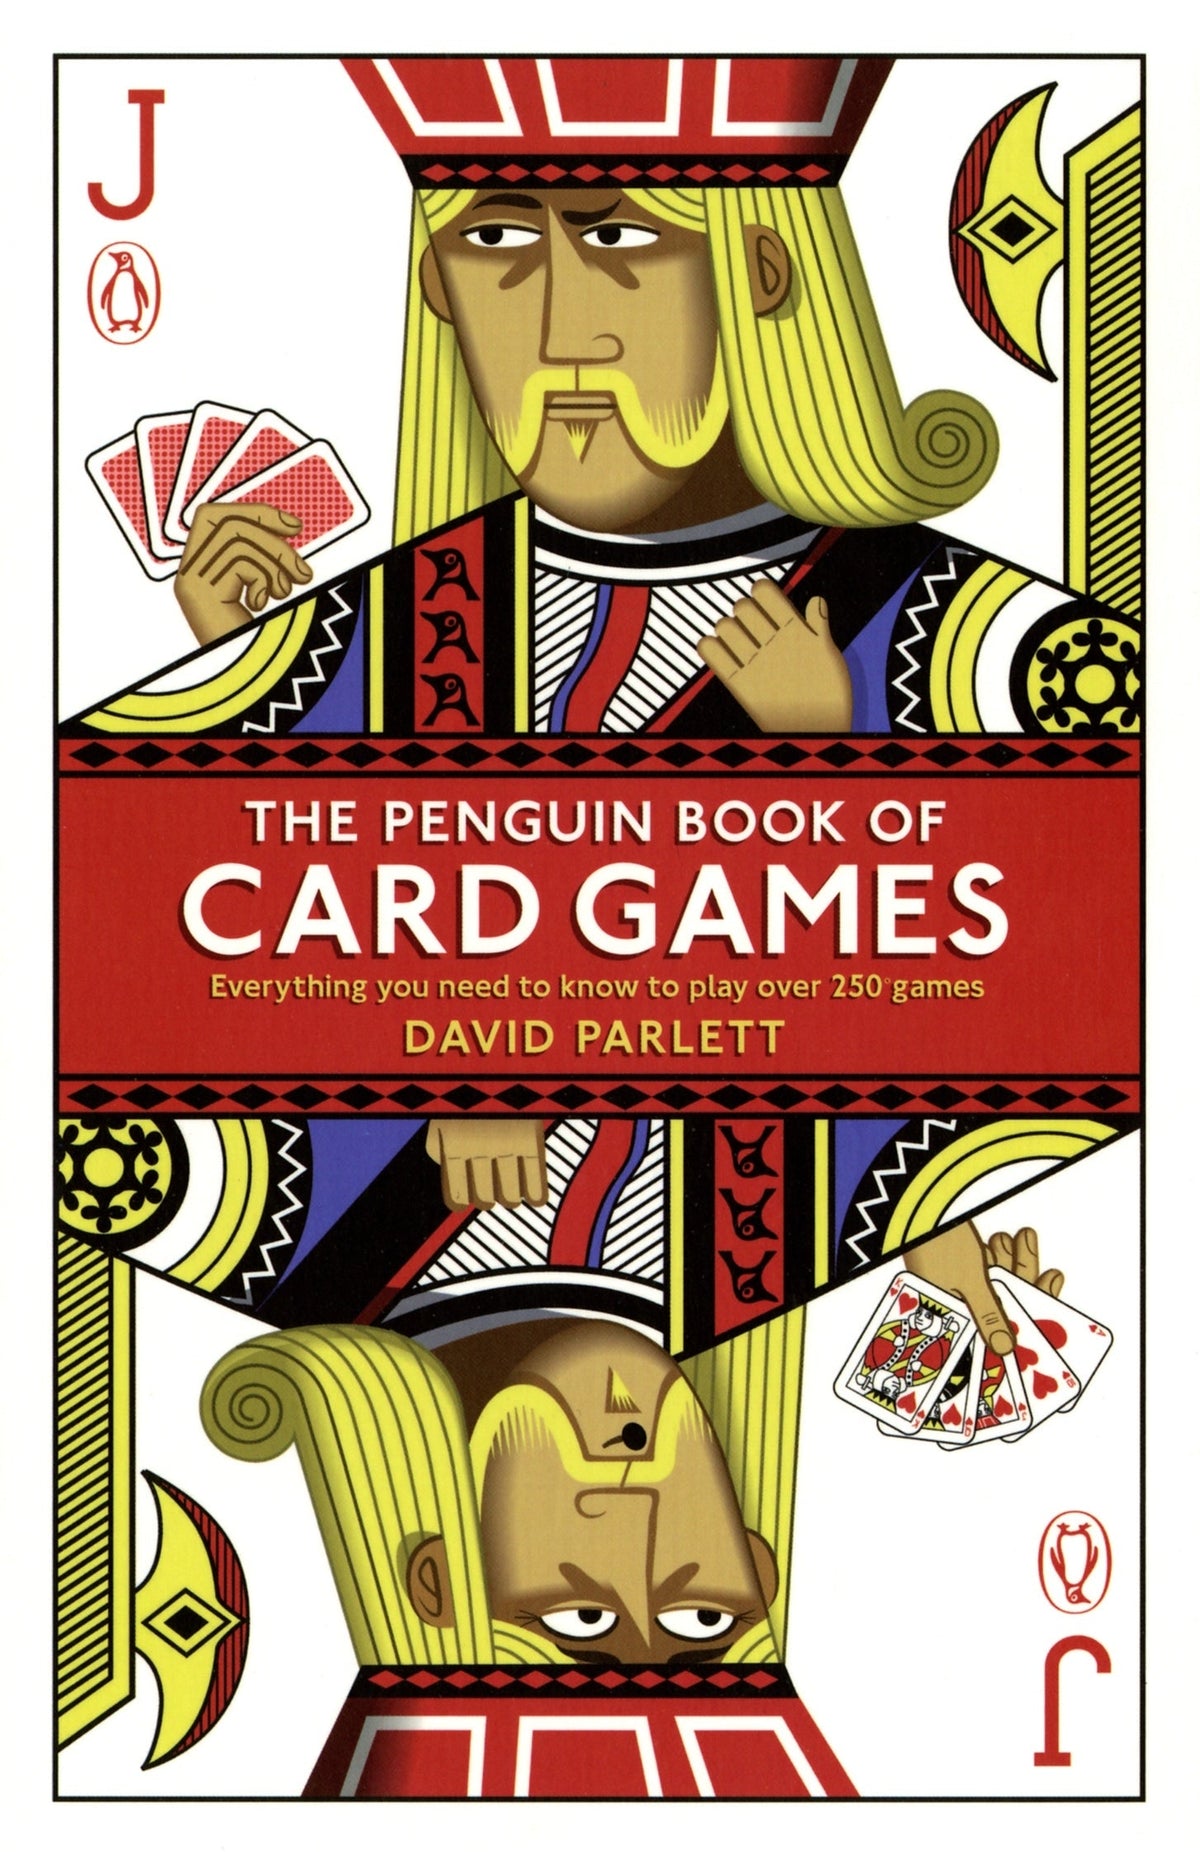 The Penguin Book of Card Games [David Parlett]